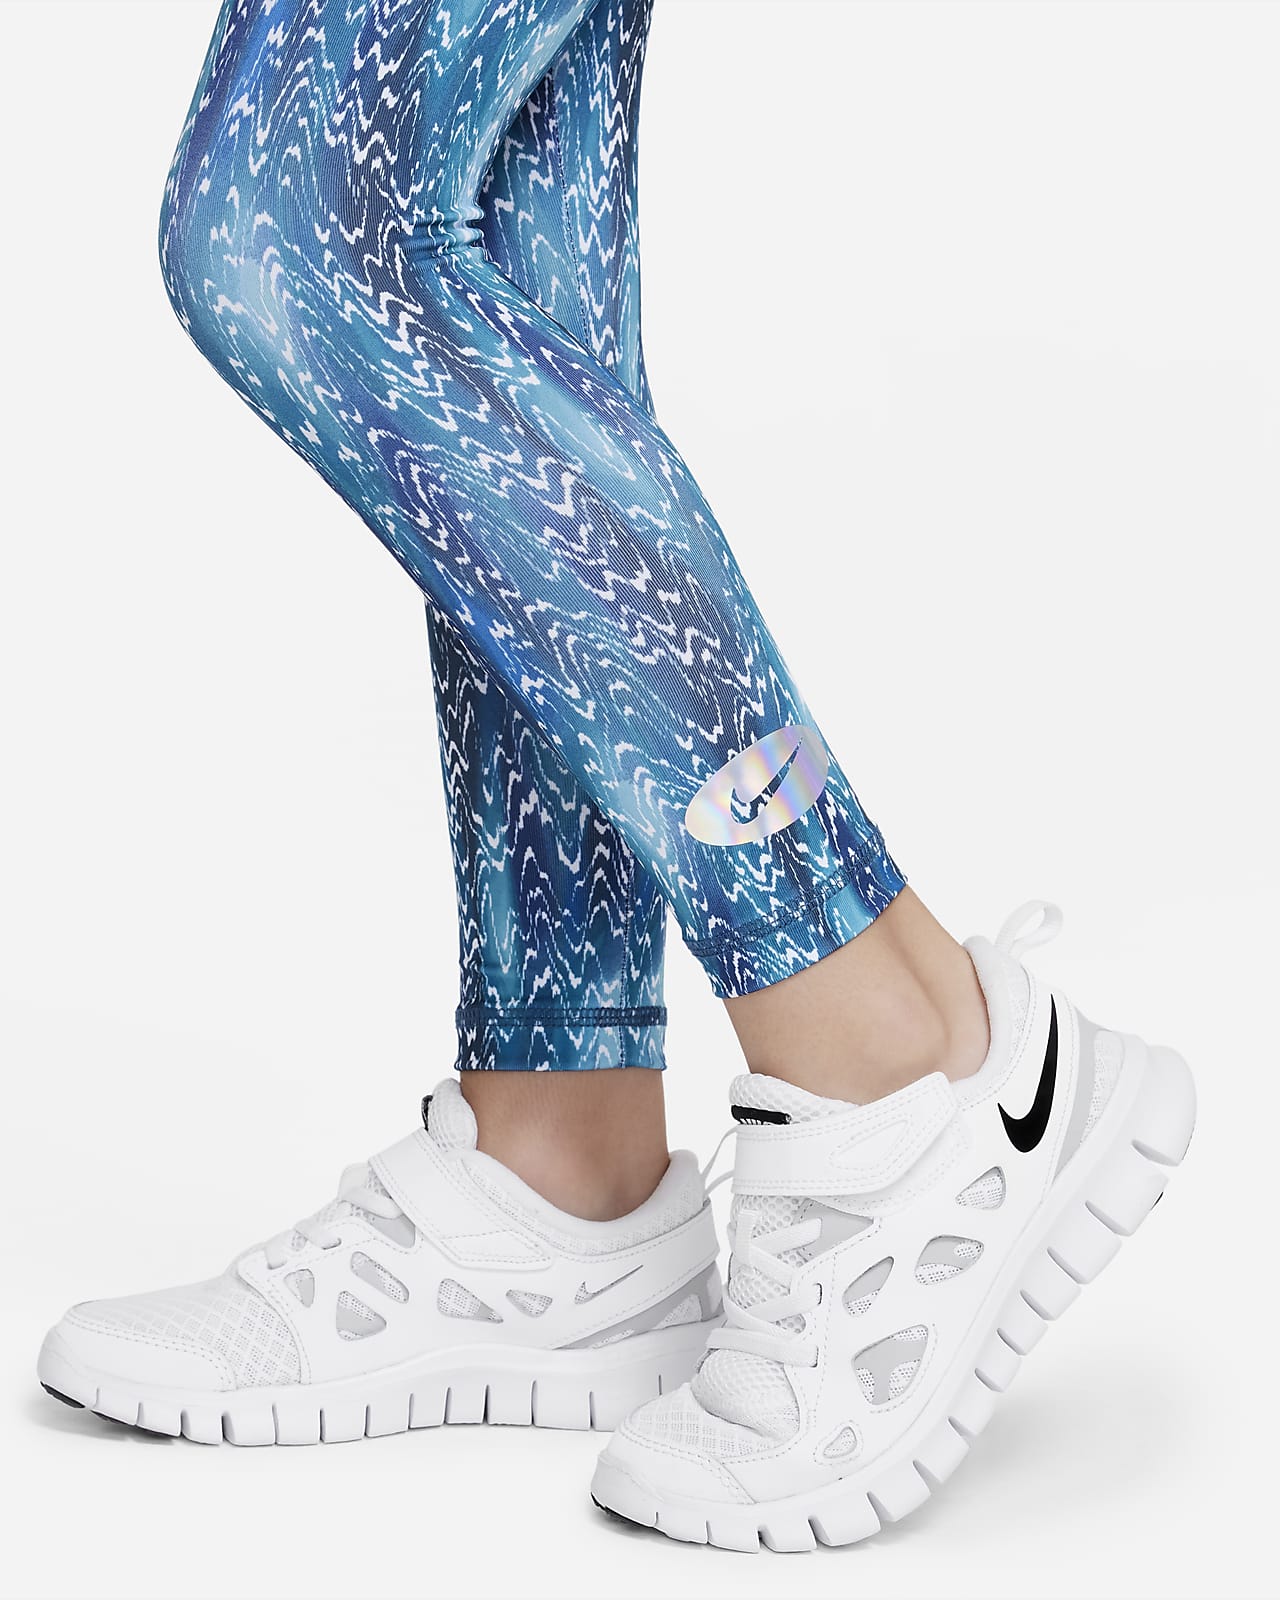 Nike Women's Icon Clash Running Leggings - Macy's